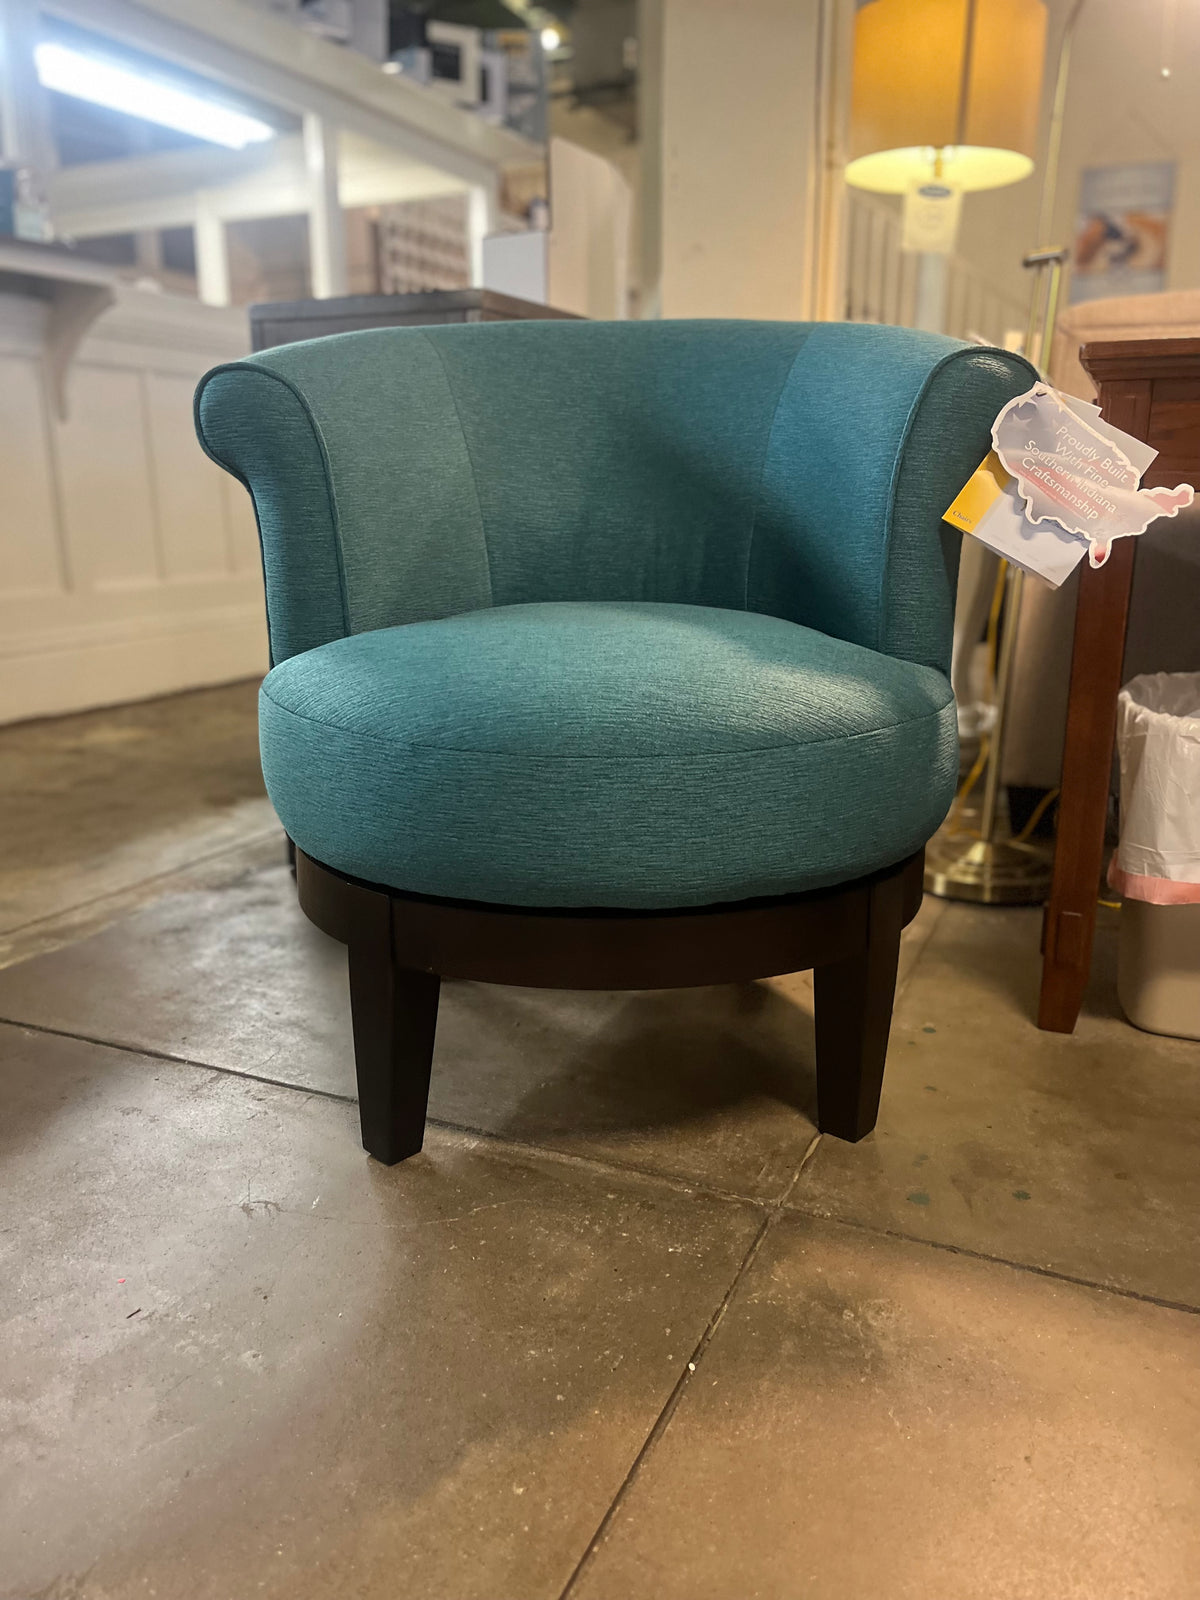 Attica Swivel Chair - Peacock